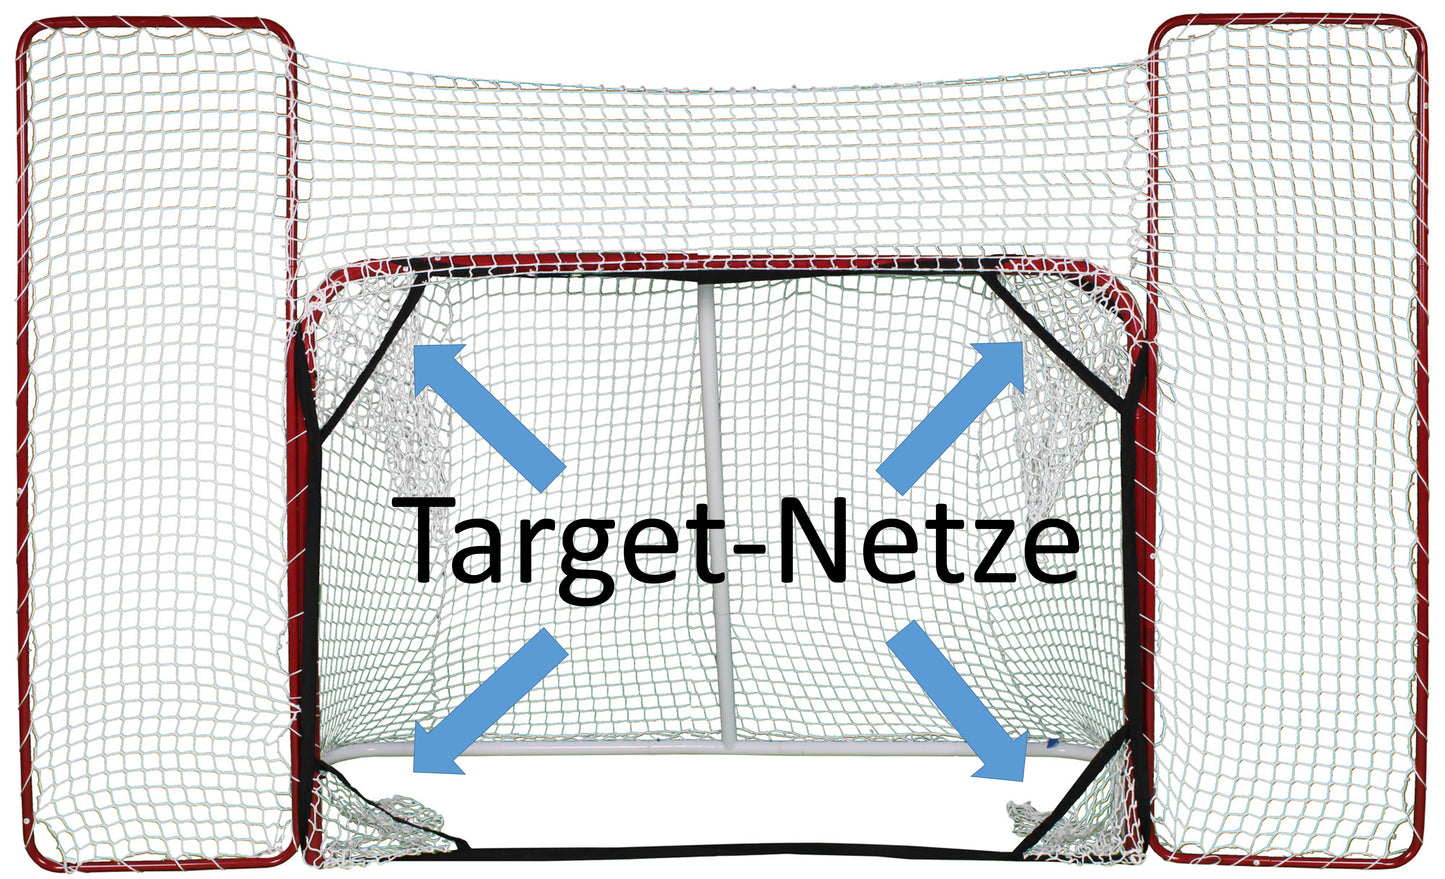 Hockey goal 188x129cm with safety net 302x175cm, besthockey hockey goal target